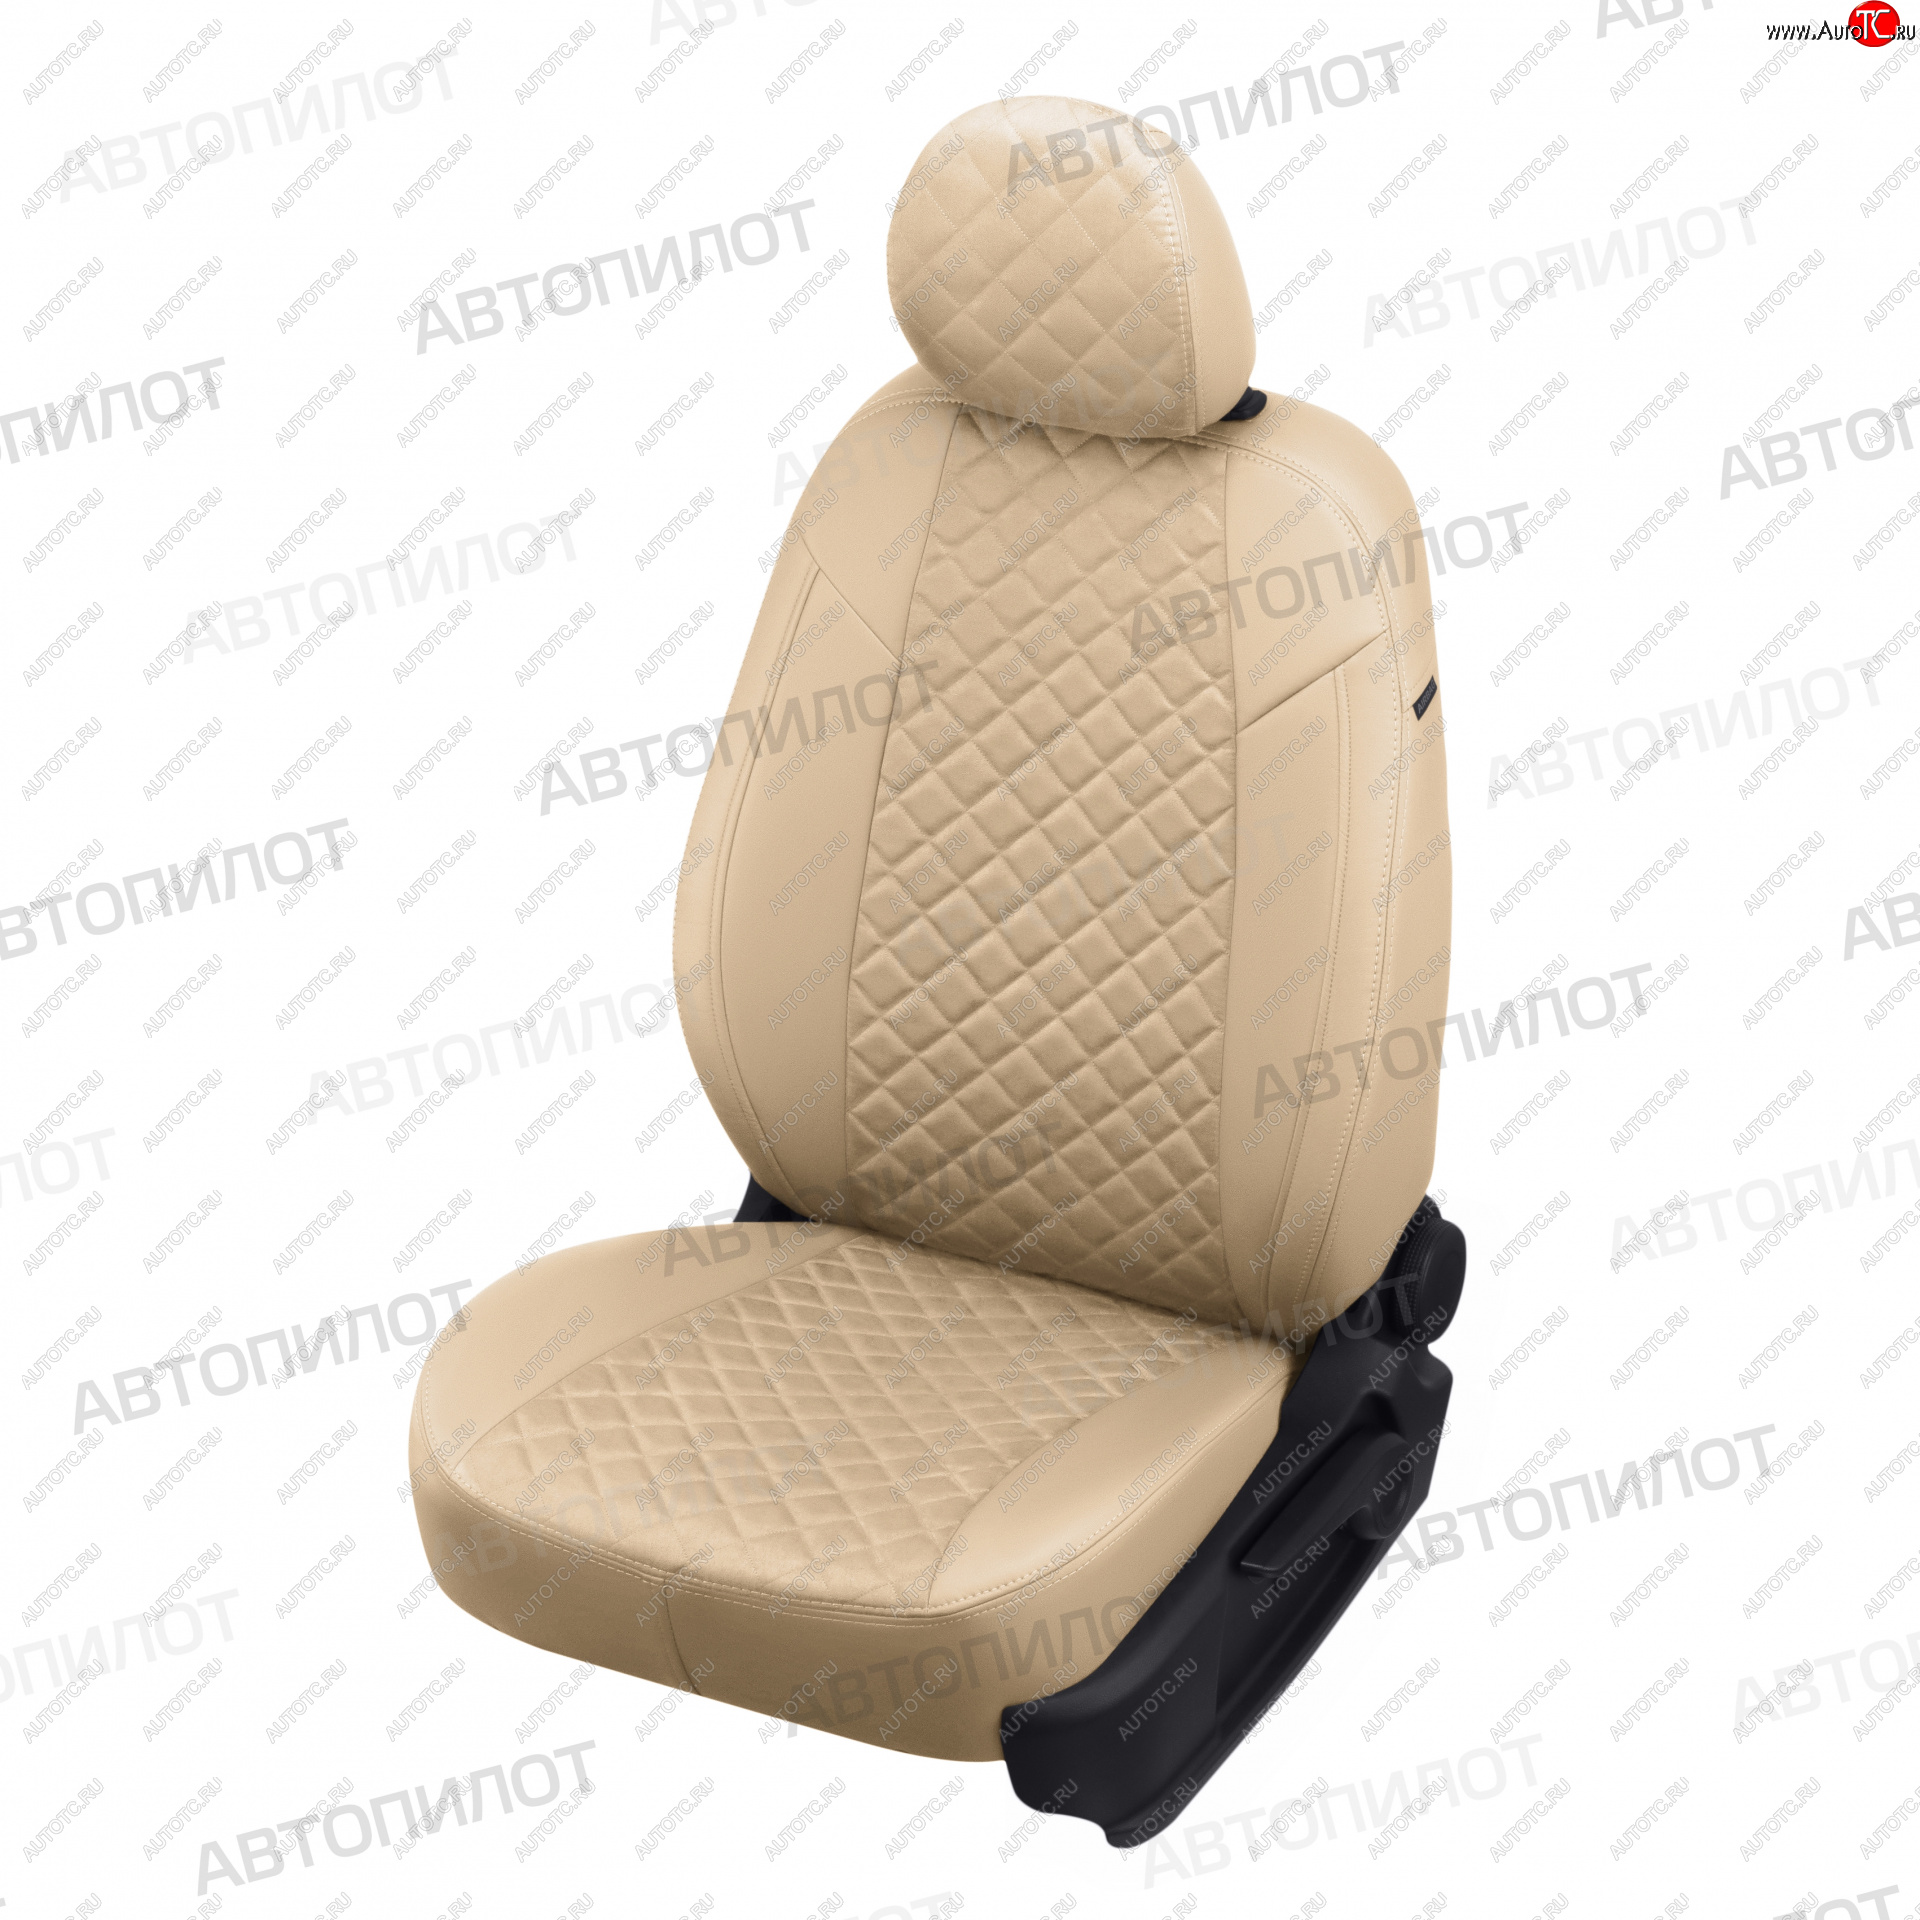 13 999 р. Чехлы сидений (экокожа/алькантара) Автопилот Ромб  BYD F3 (2005-2014) (бежевый)